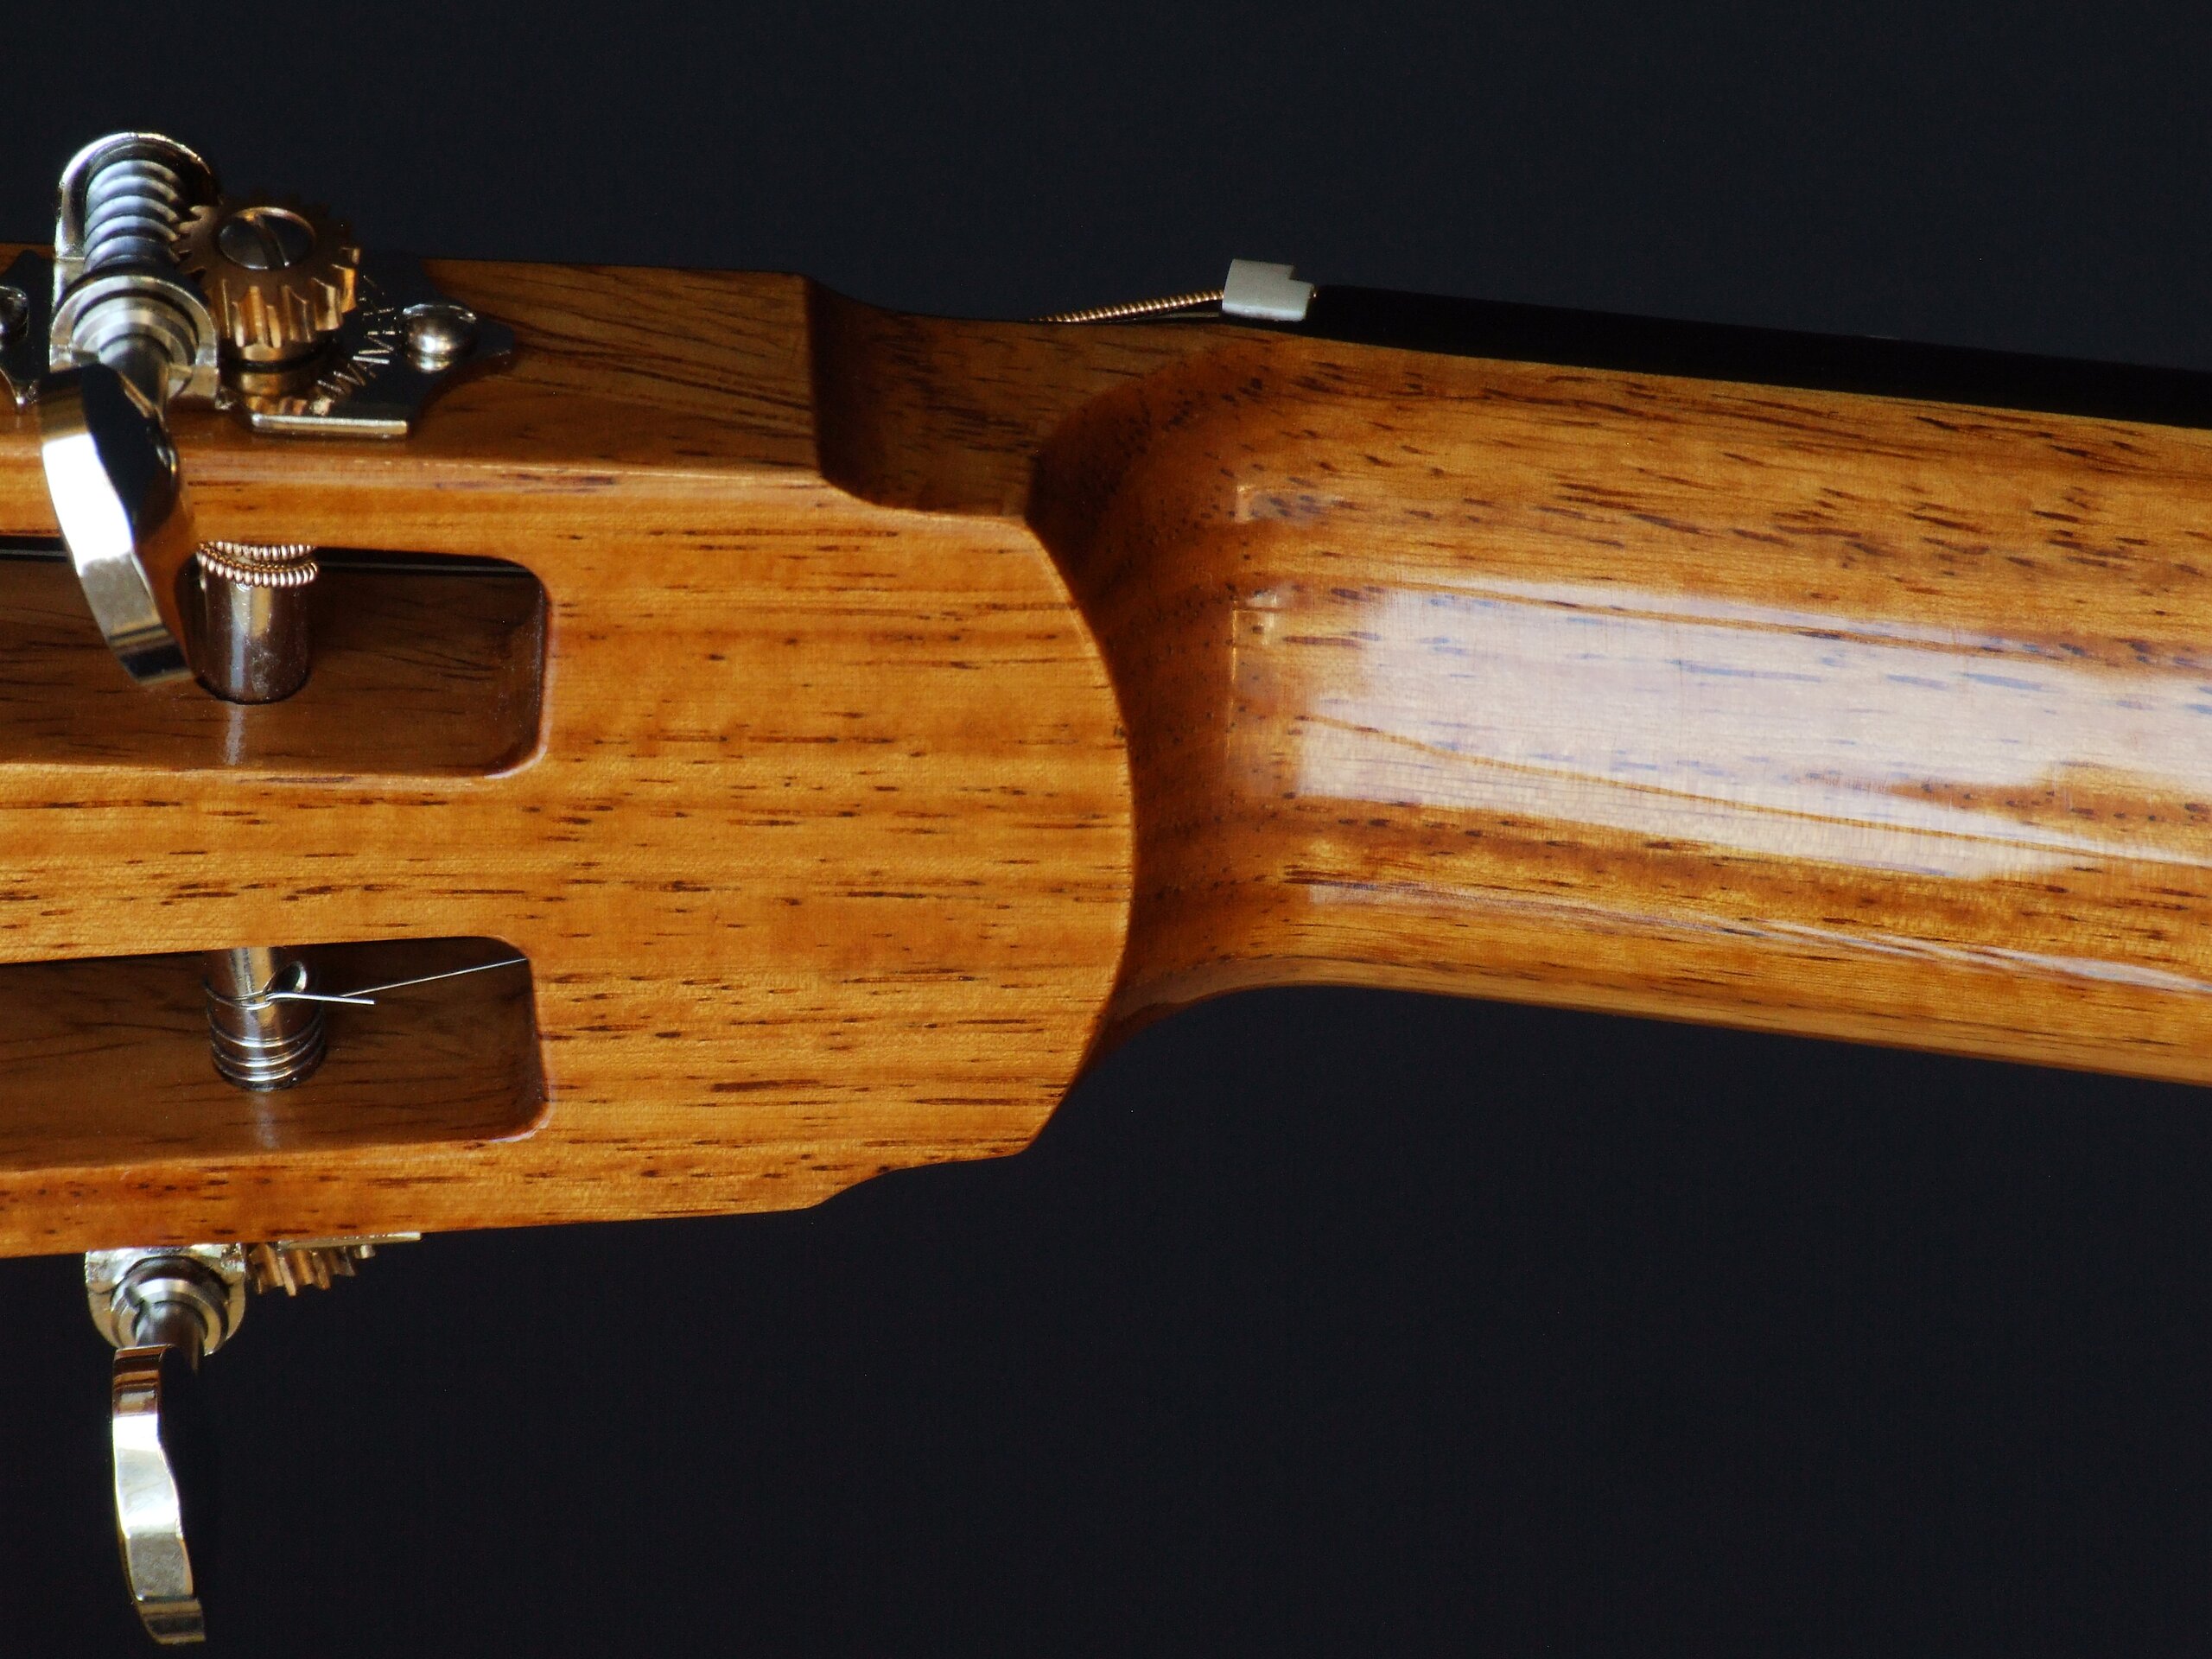 Throat of a slot-head steel string guitar